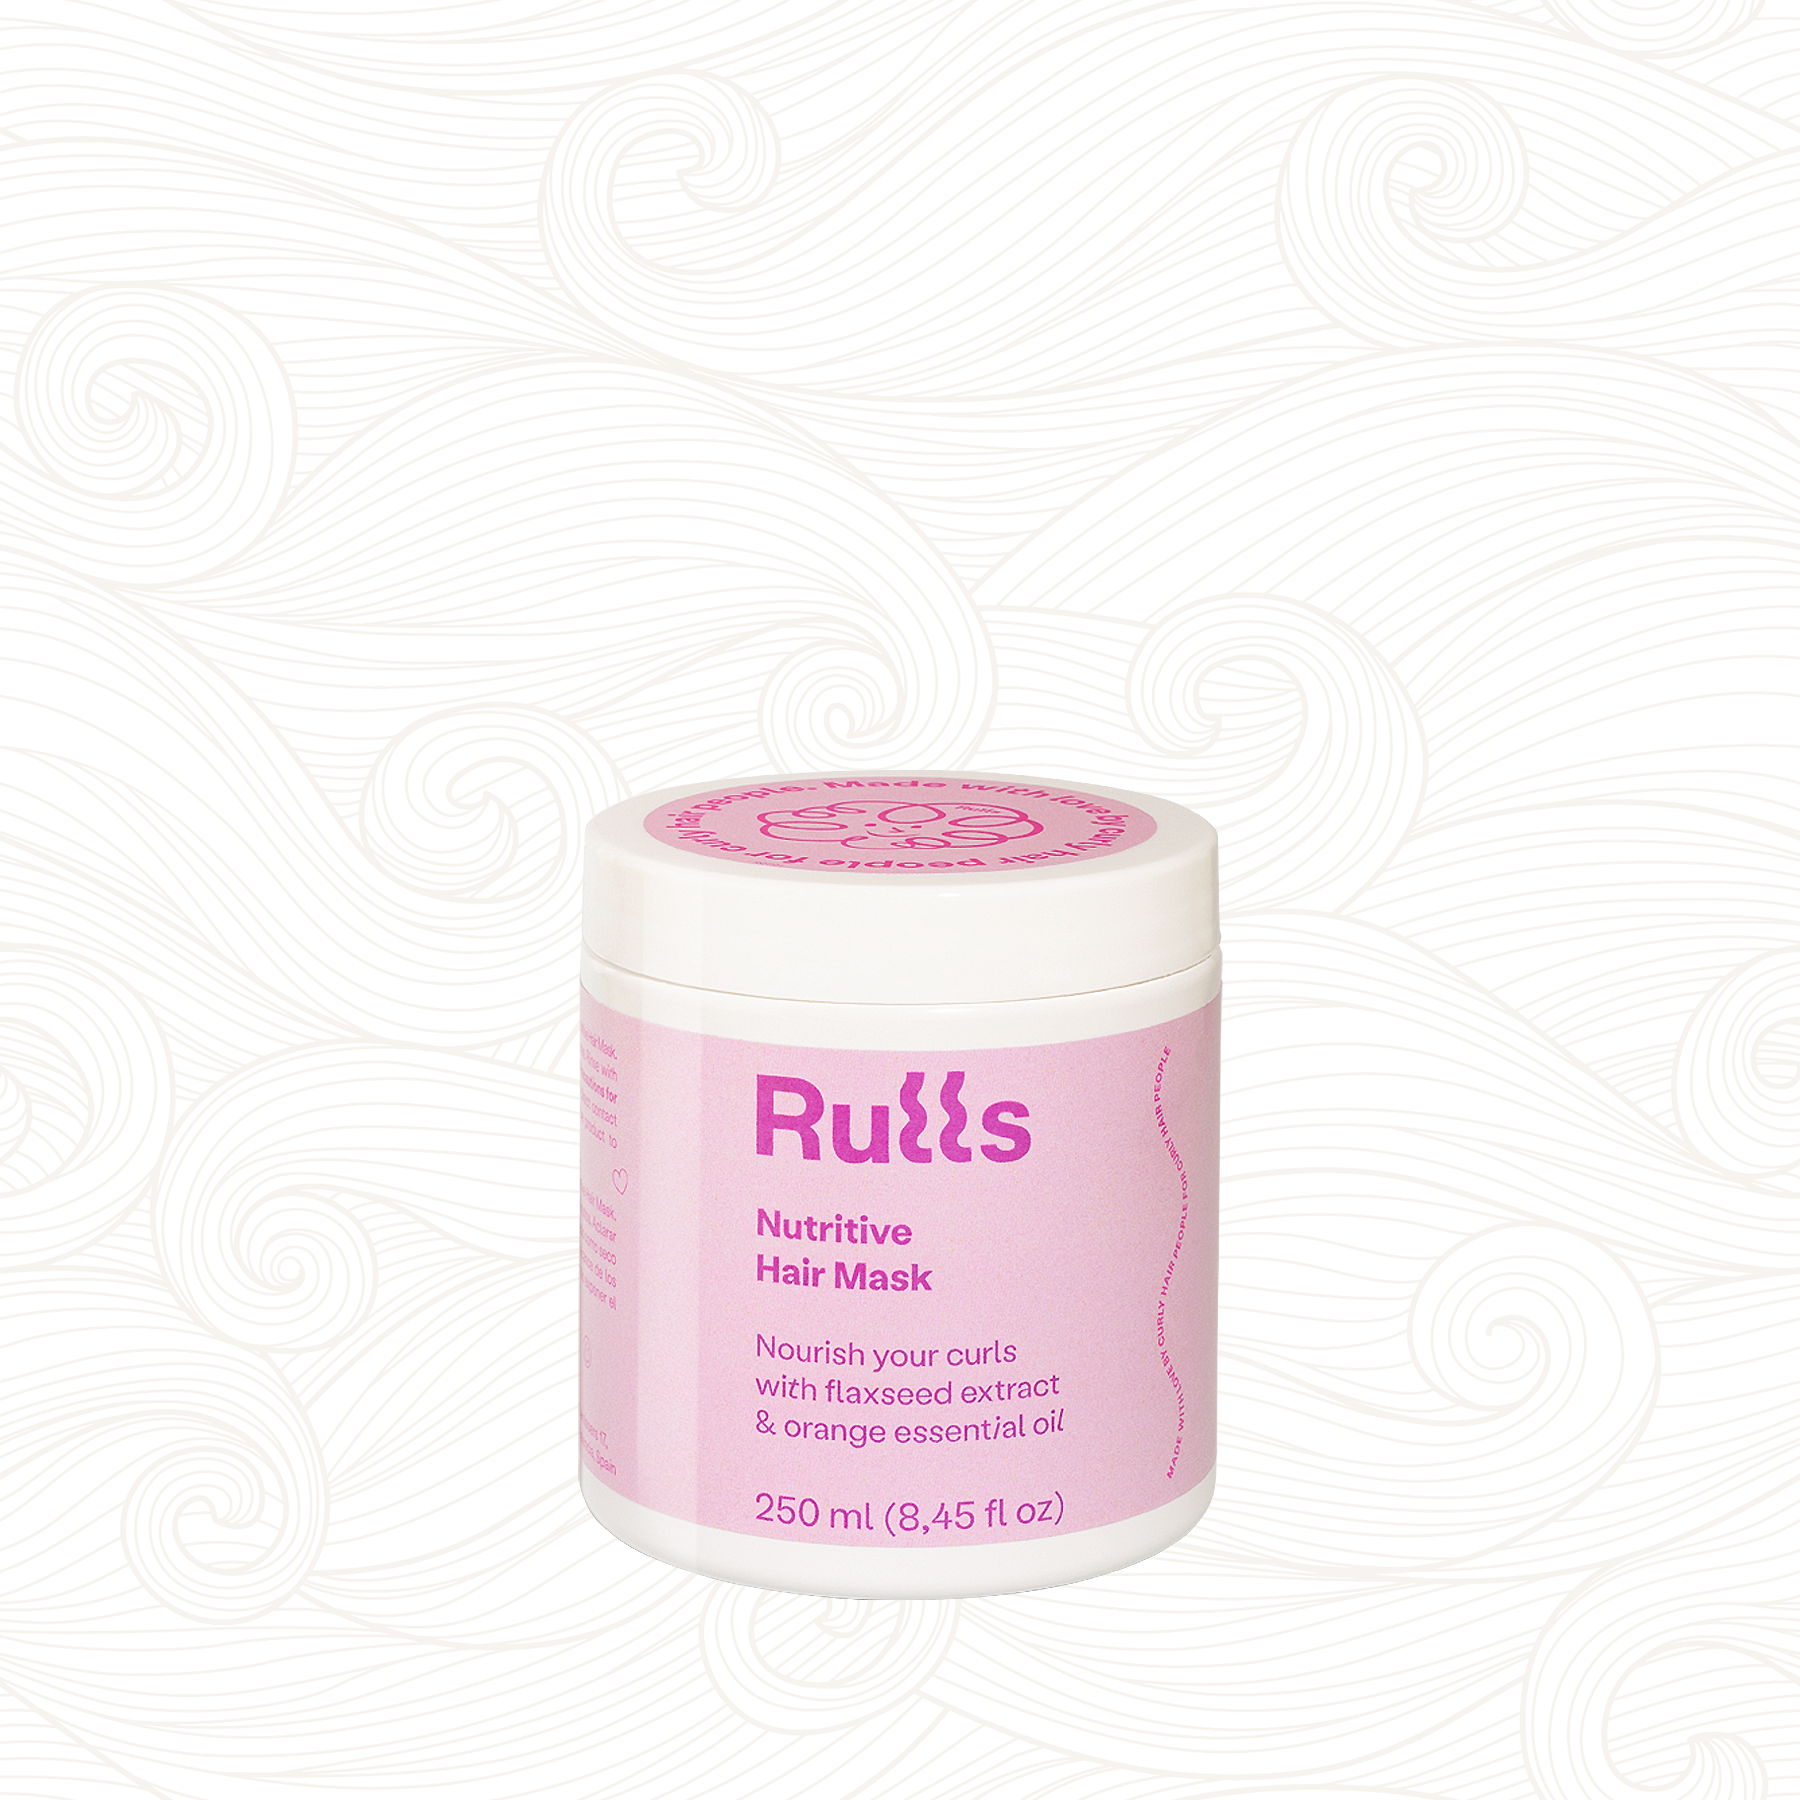 Rulls | Nutritive Hair Mask /250ml